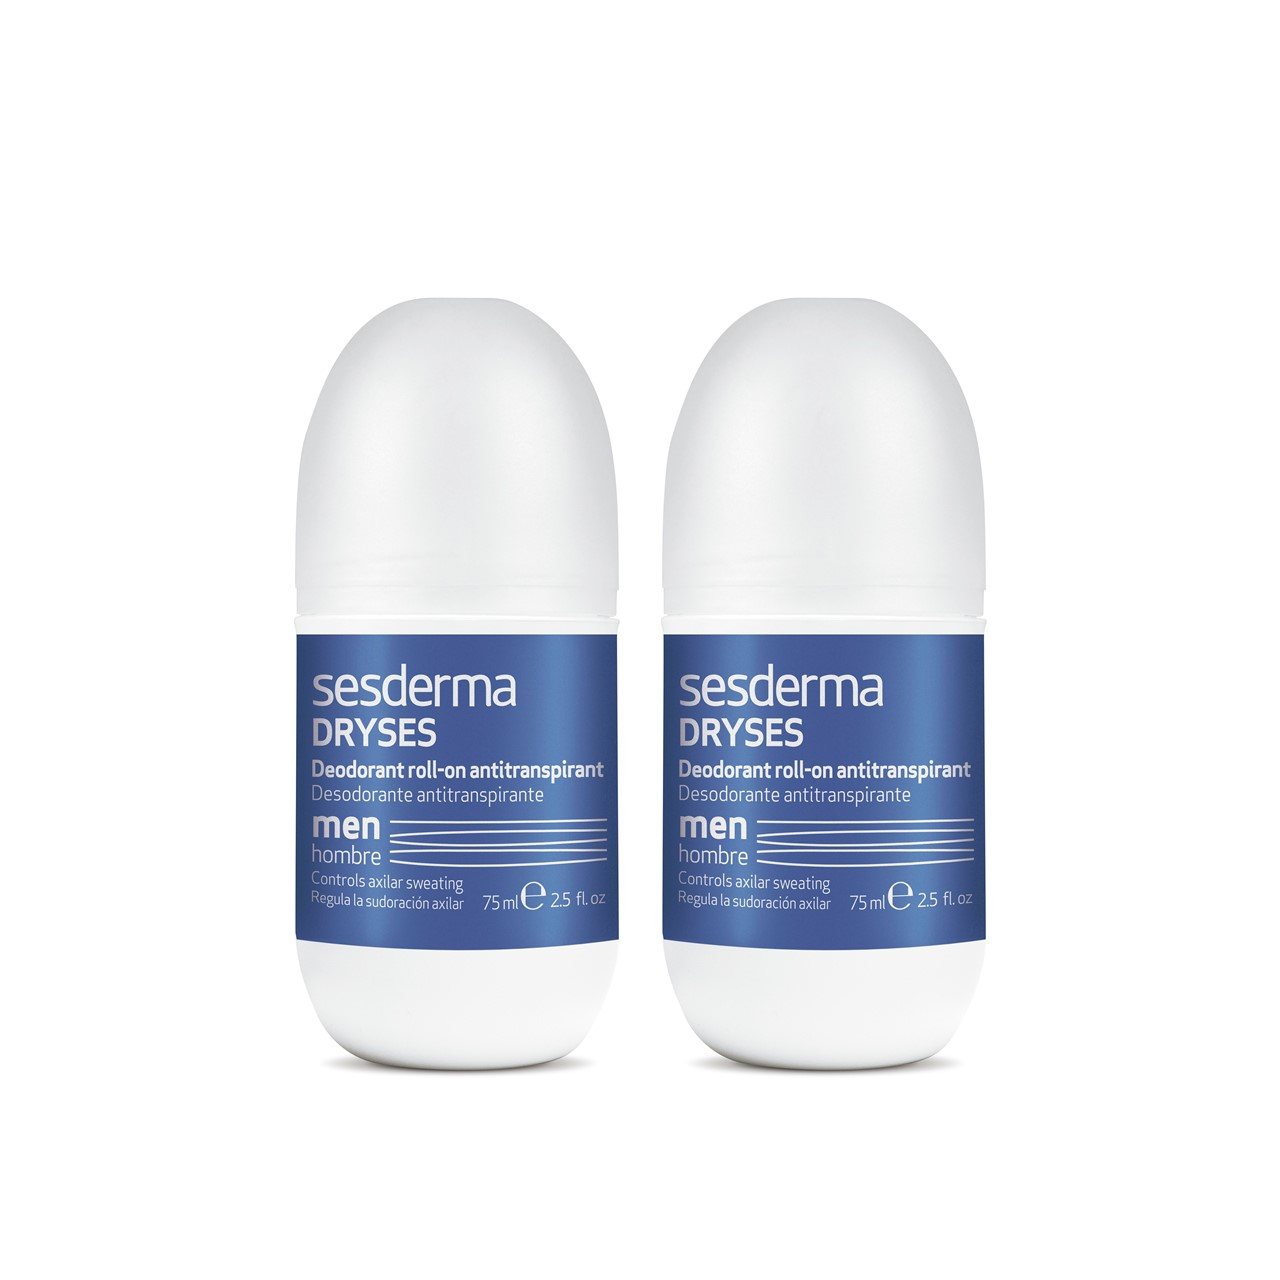 Sesderma Dryses Men Deodorant Roll-On Antiperspirant 2x75ml